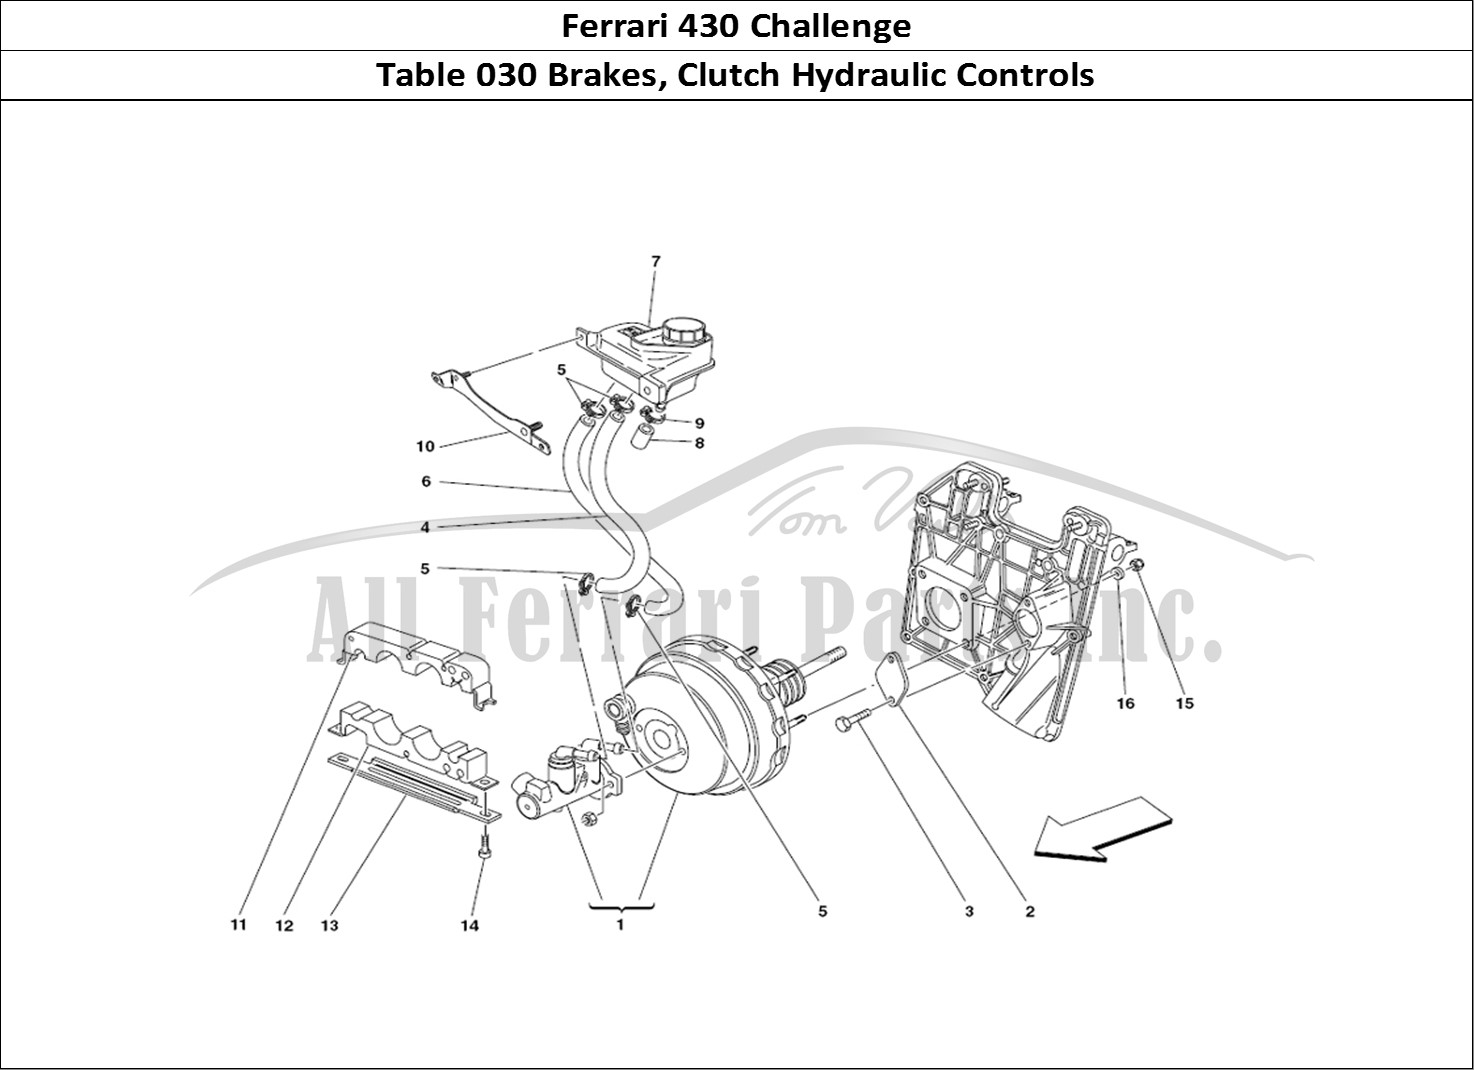 Ferrari Parts Ferrari 430 Challenge (2006) Page 030 brakes and clutch hydraul